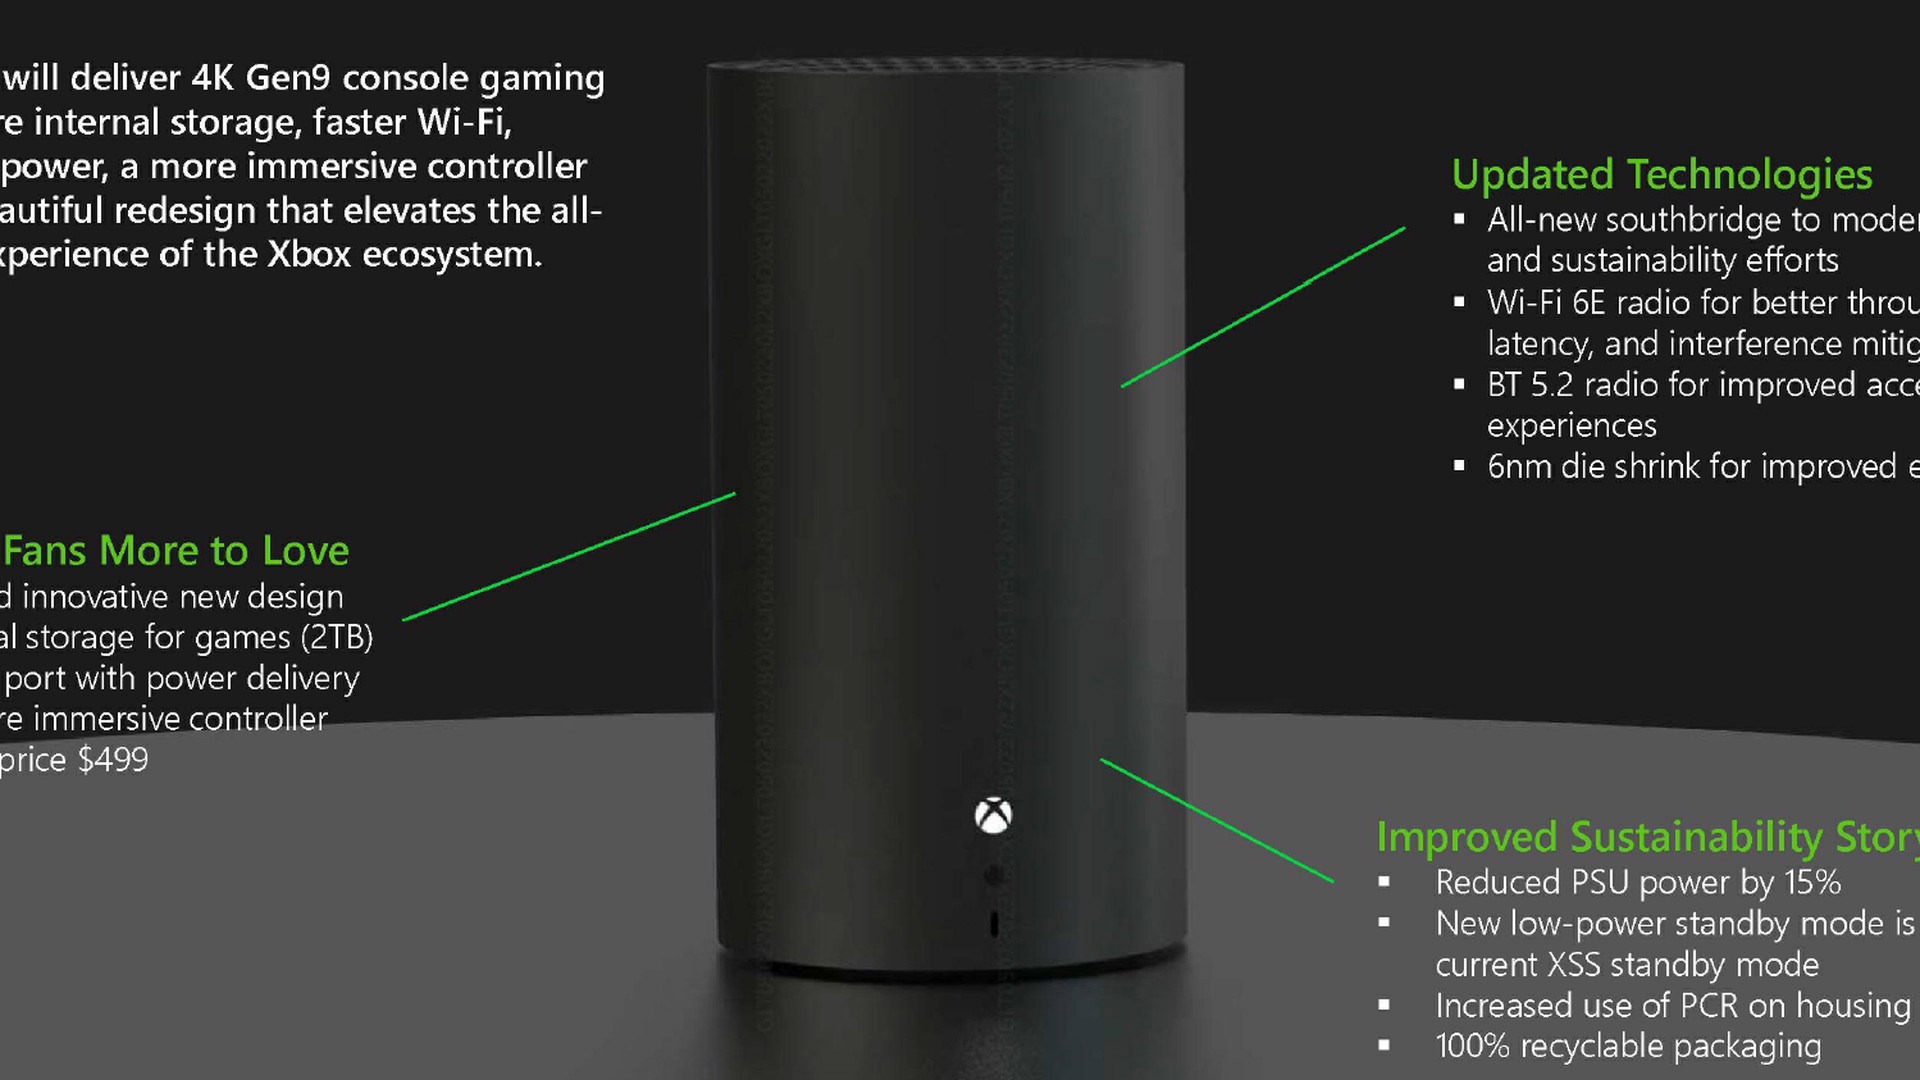 New alldigital Xbox Series X design coming next year